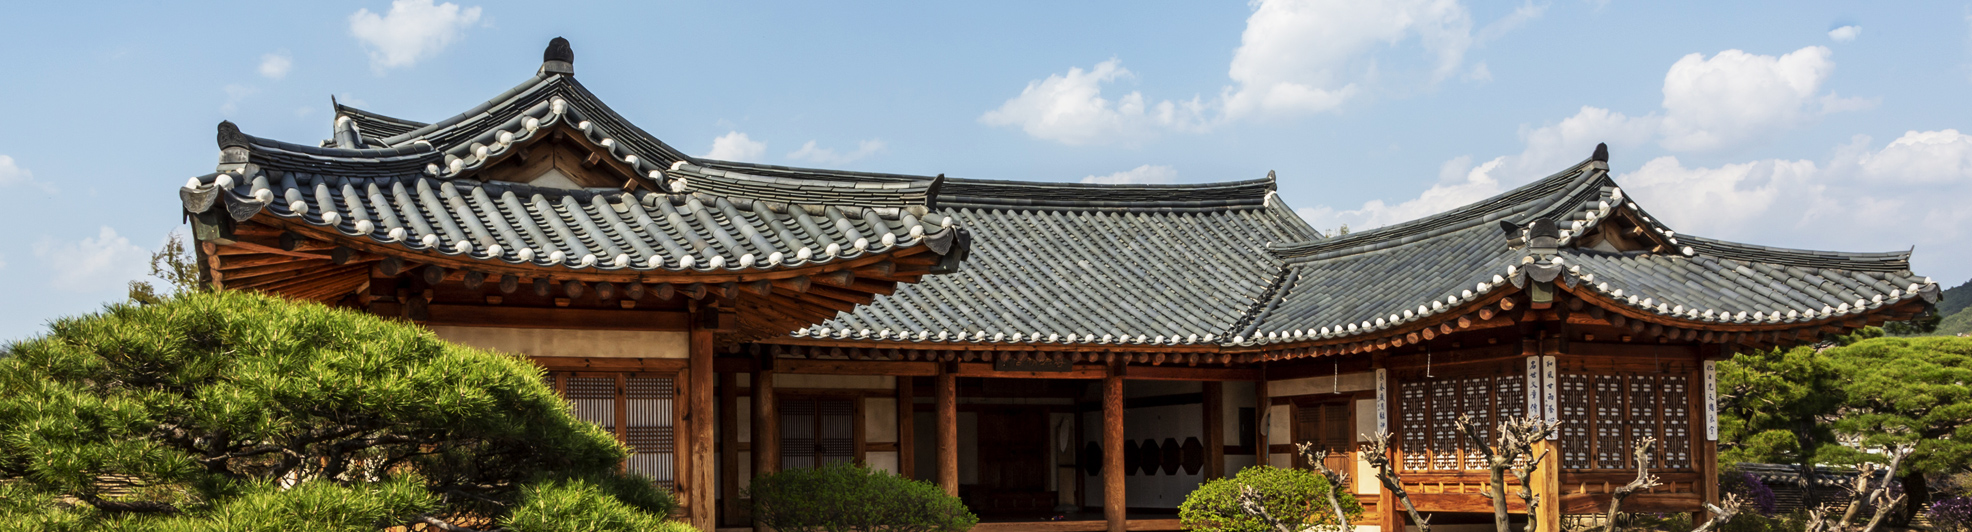 Korean-style house, Hanok